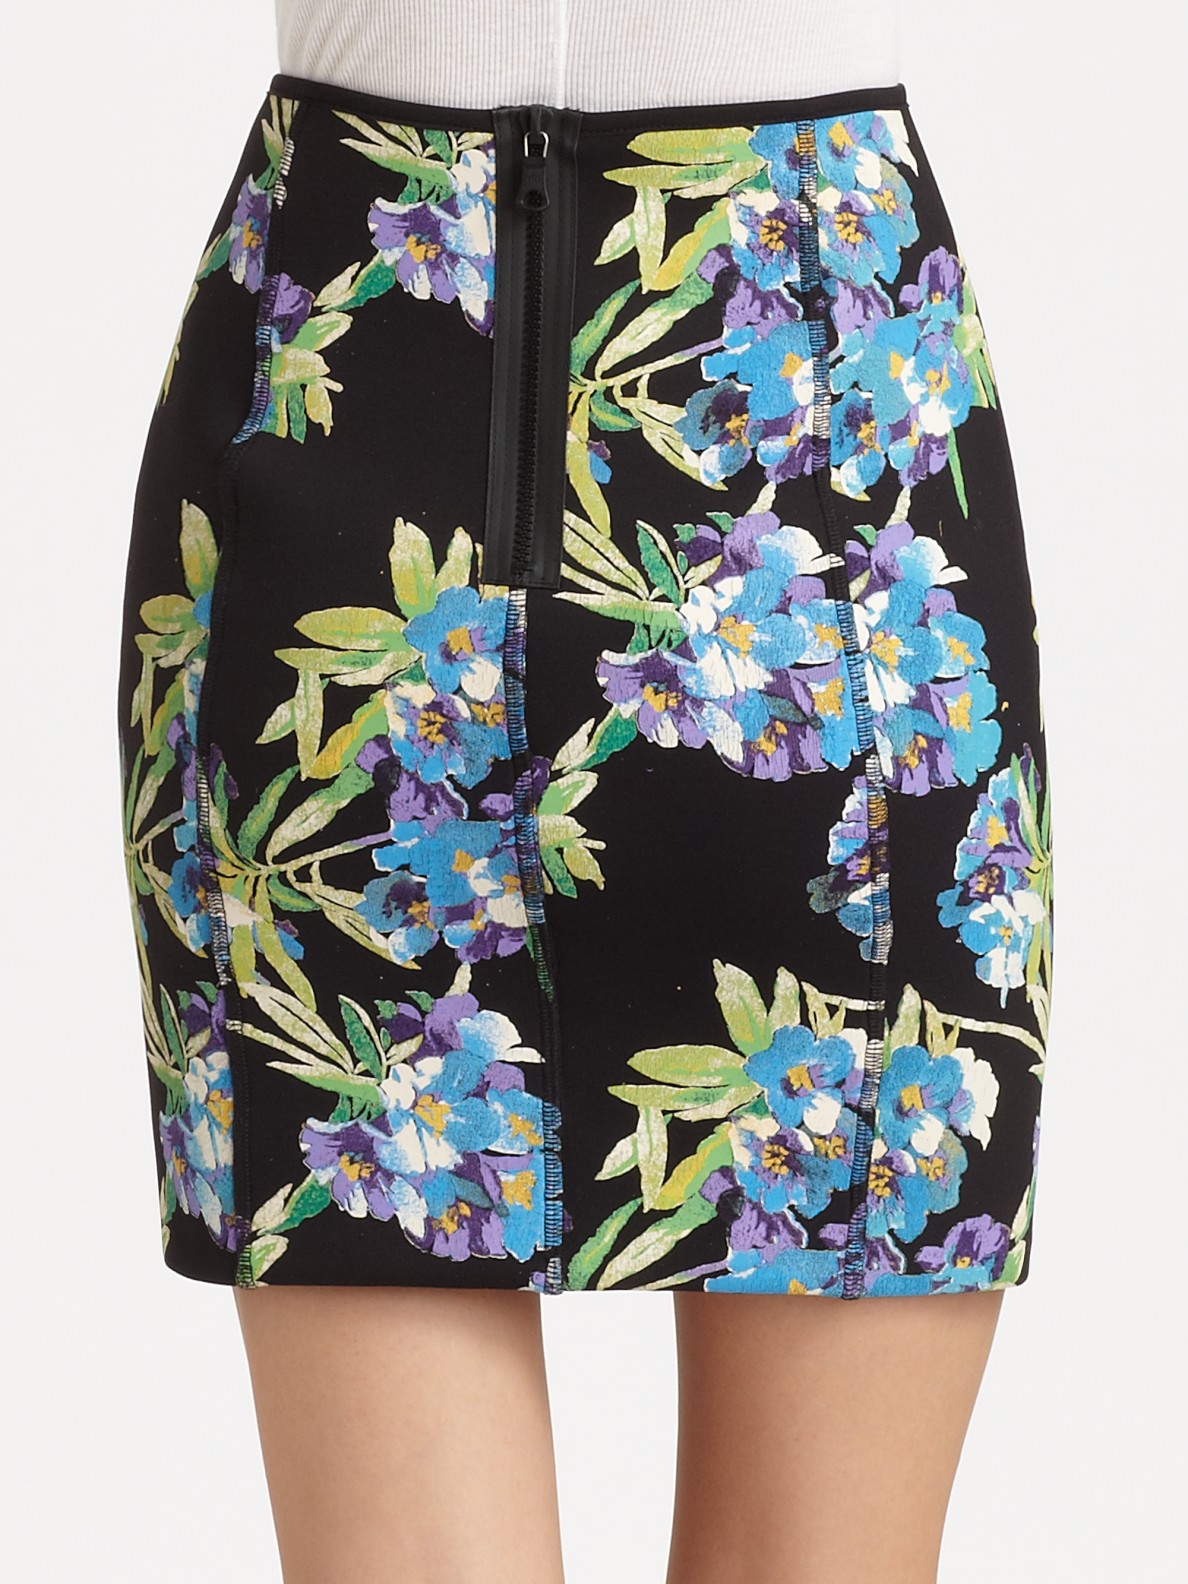 Lyst - Elizabeth And James Scuba Floral-print Neoprene Mini Skirt in Black